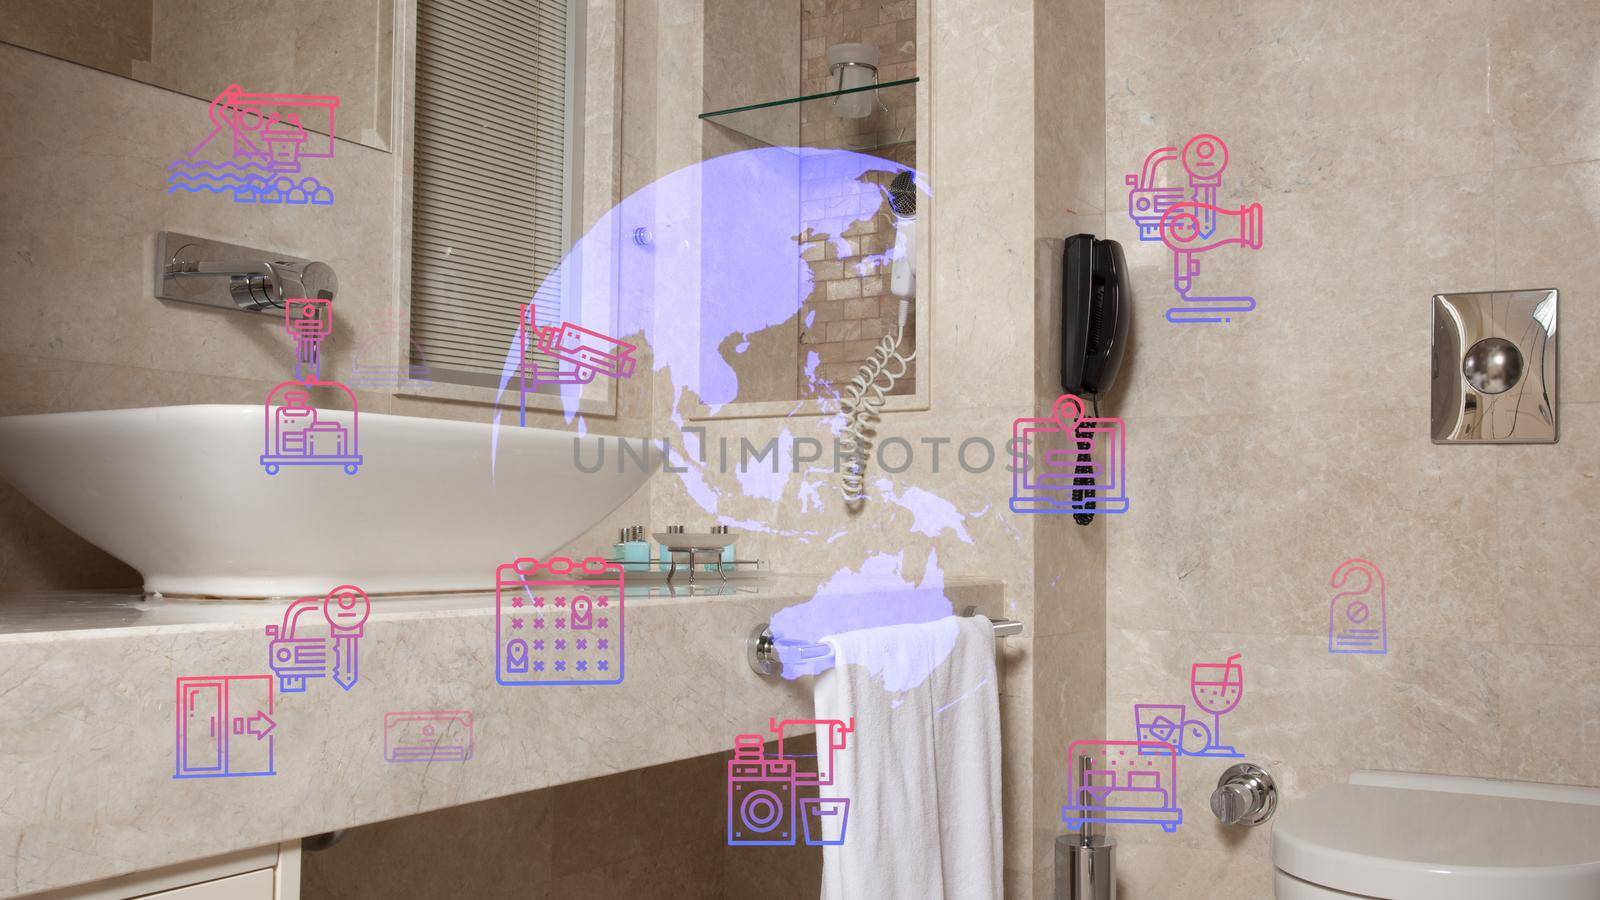 Luxury Bathroom Interior, minimalist interior in white colors with bathroom accessories , mirror and shower head, round mirror in modern interior. High quality 4k footage